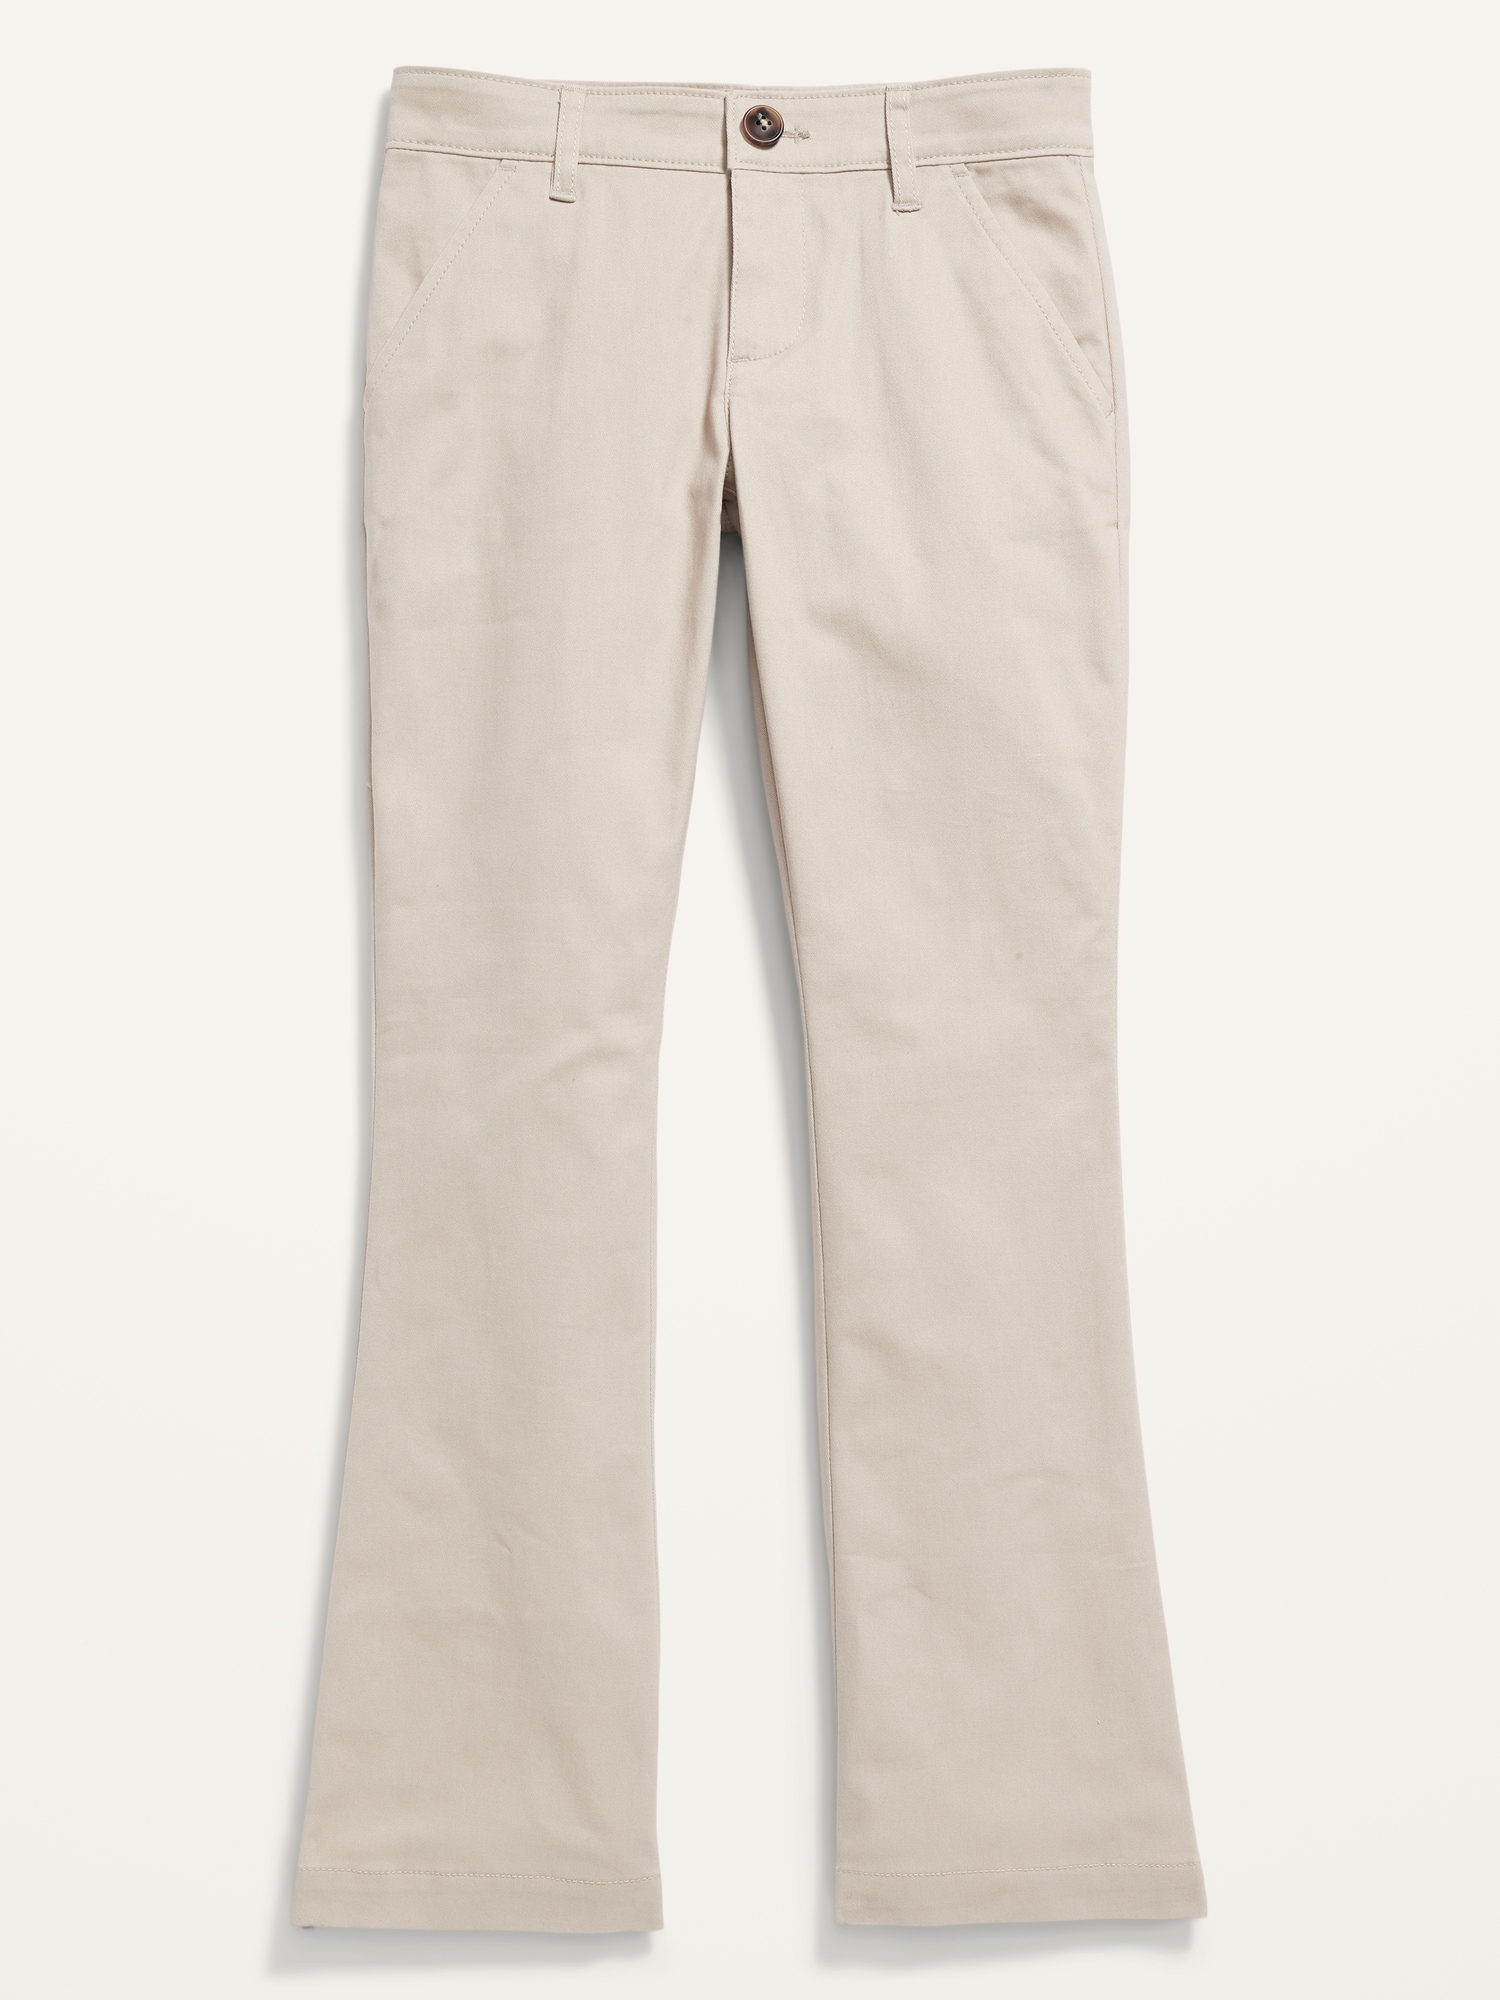 Essentials Girl's Uniform Flat-Front Chino Pants